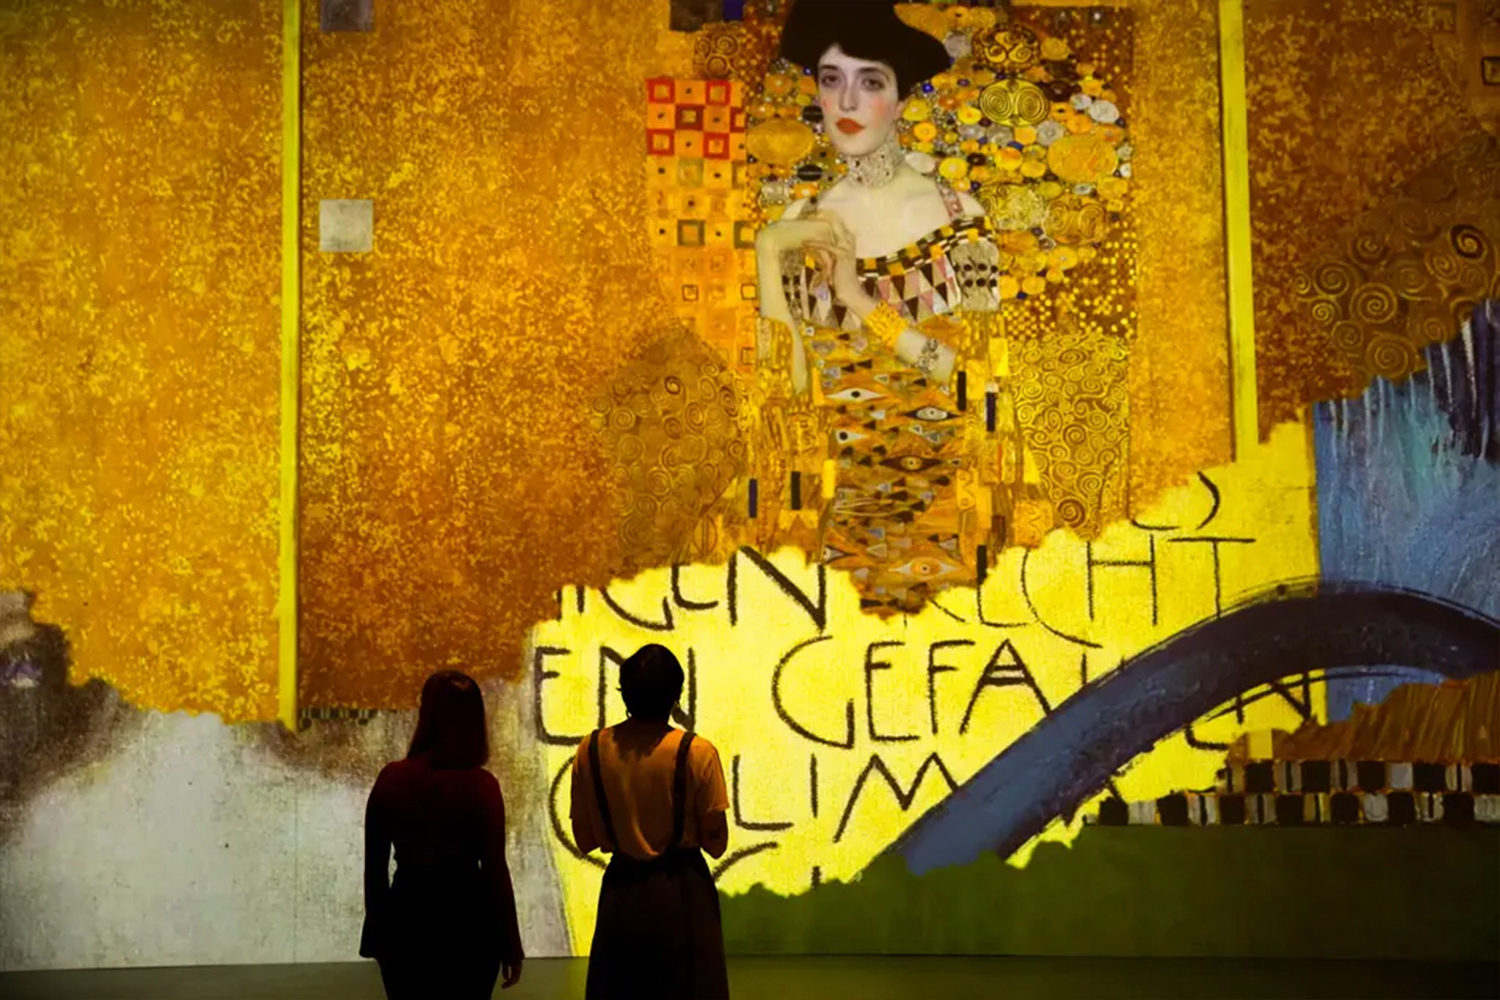 Klimt's painting